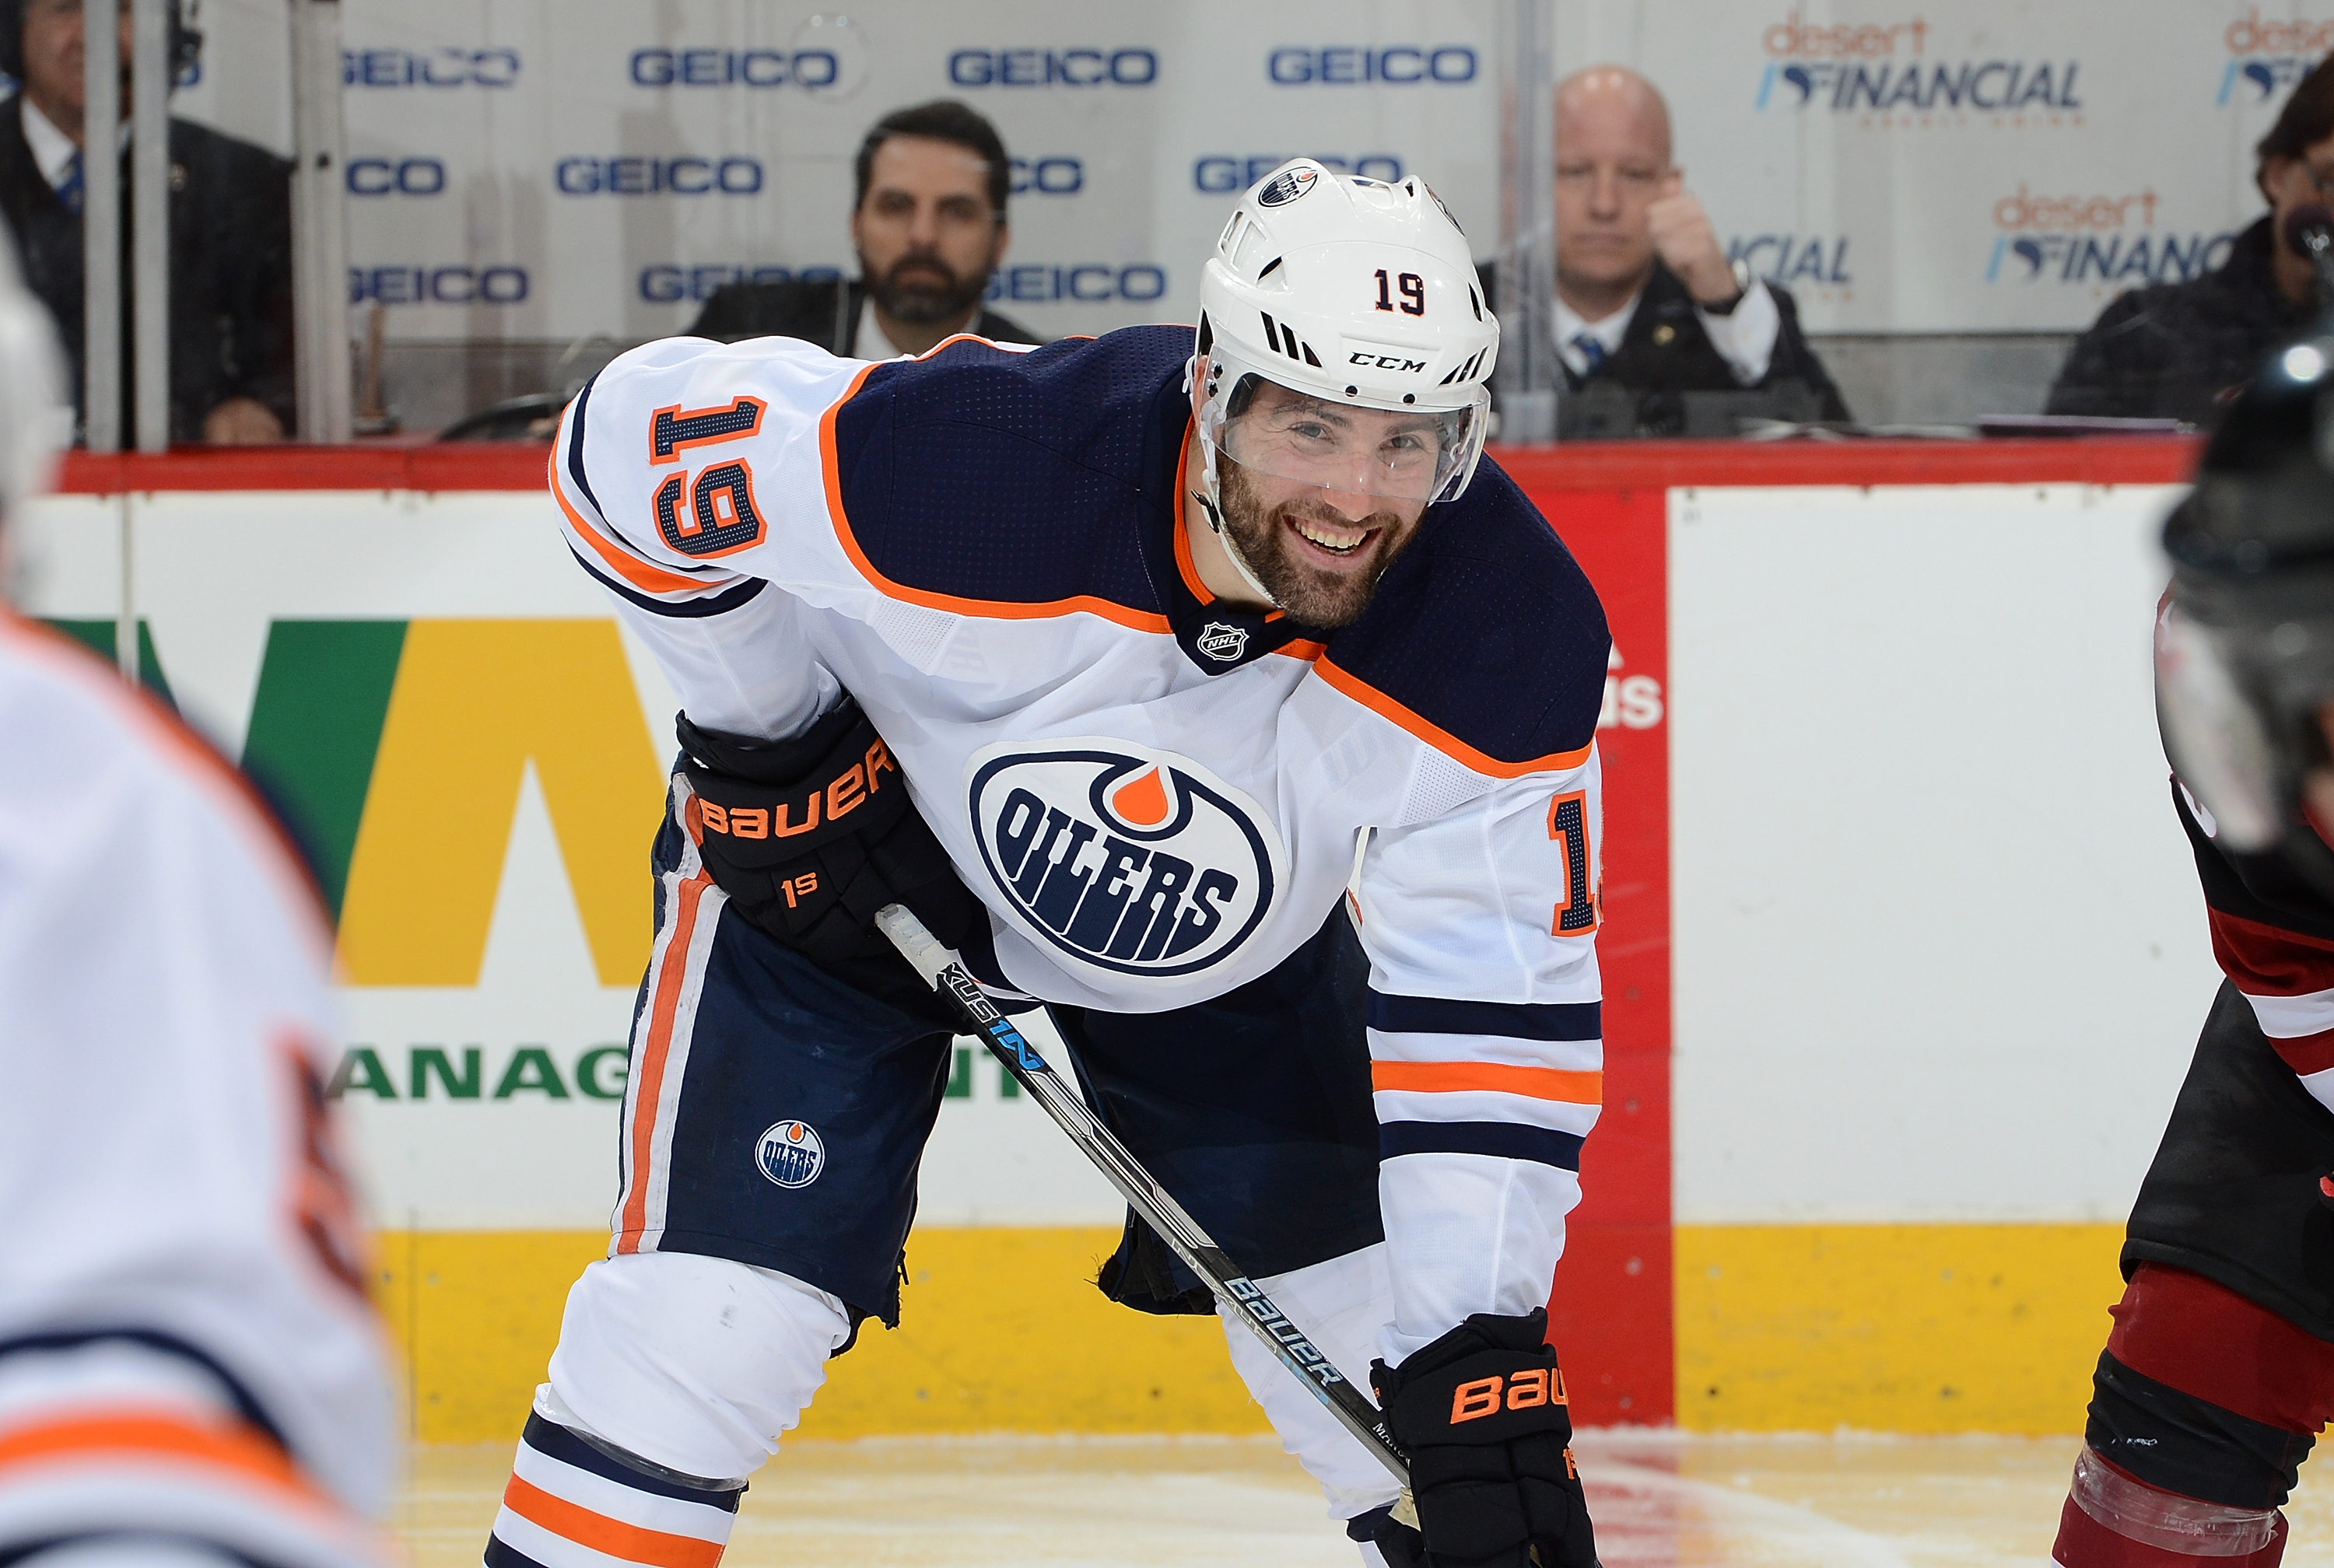 Oilers' Patrick Maroon finding success in Edmonton - Sports